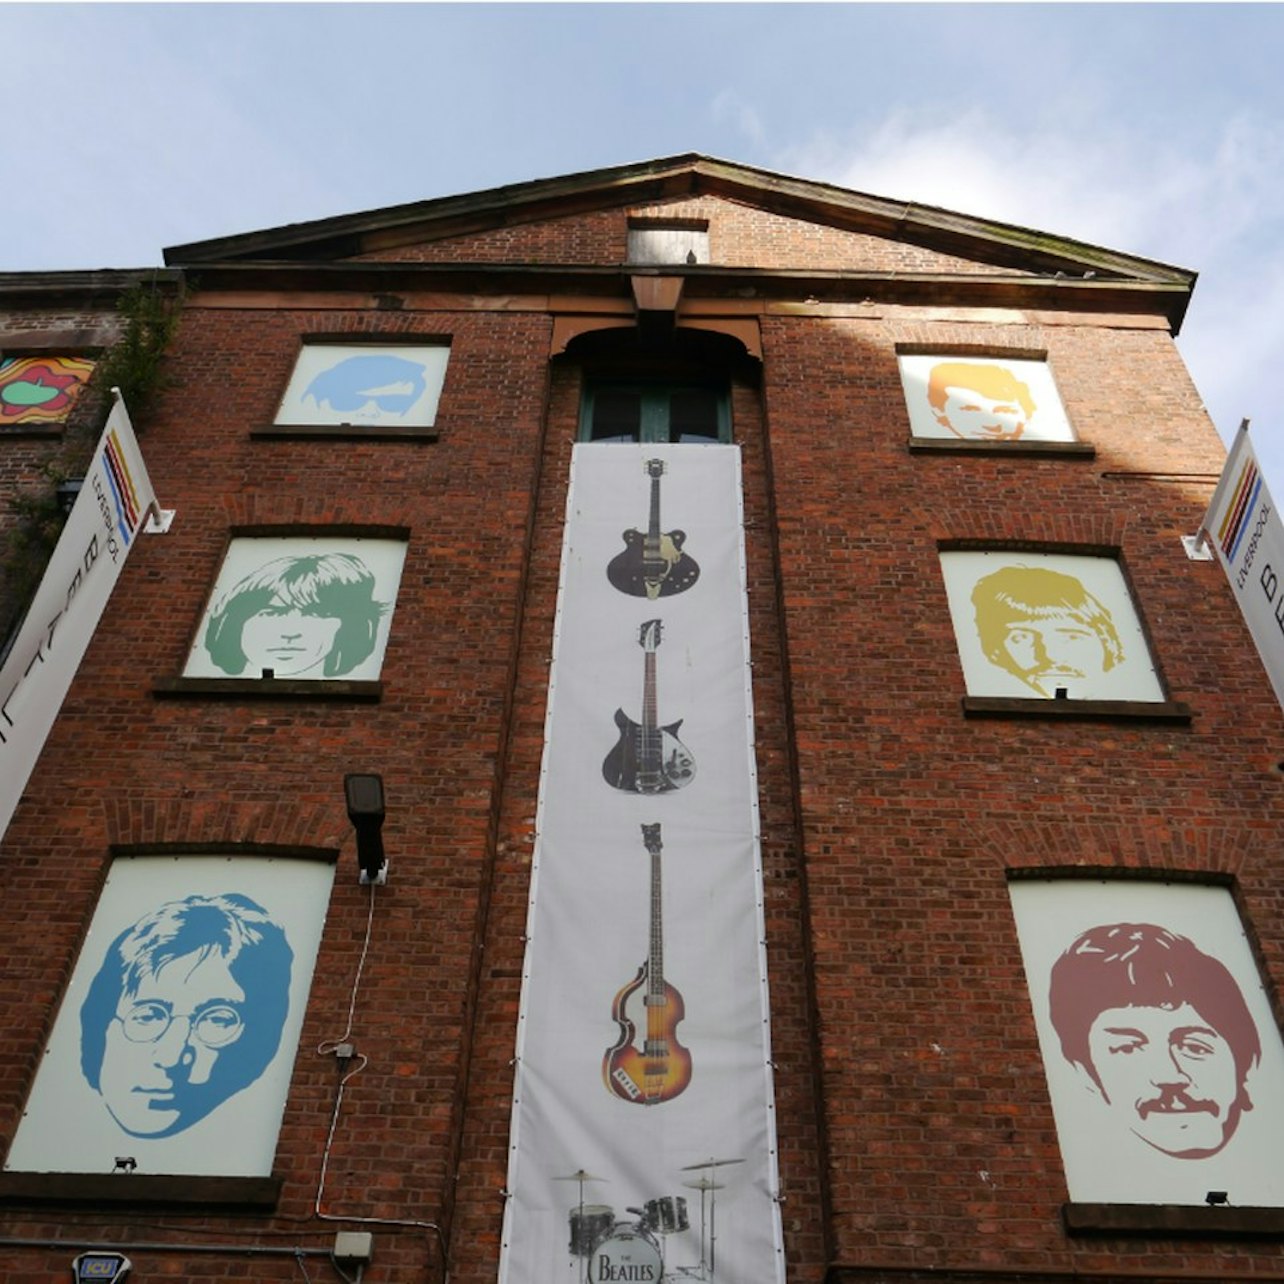 Liverpool Beatles Museum - Alojamientos en Liverpool